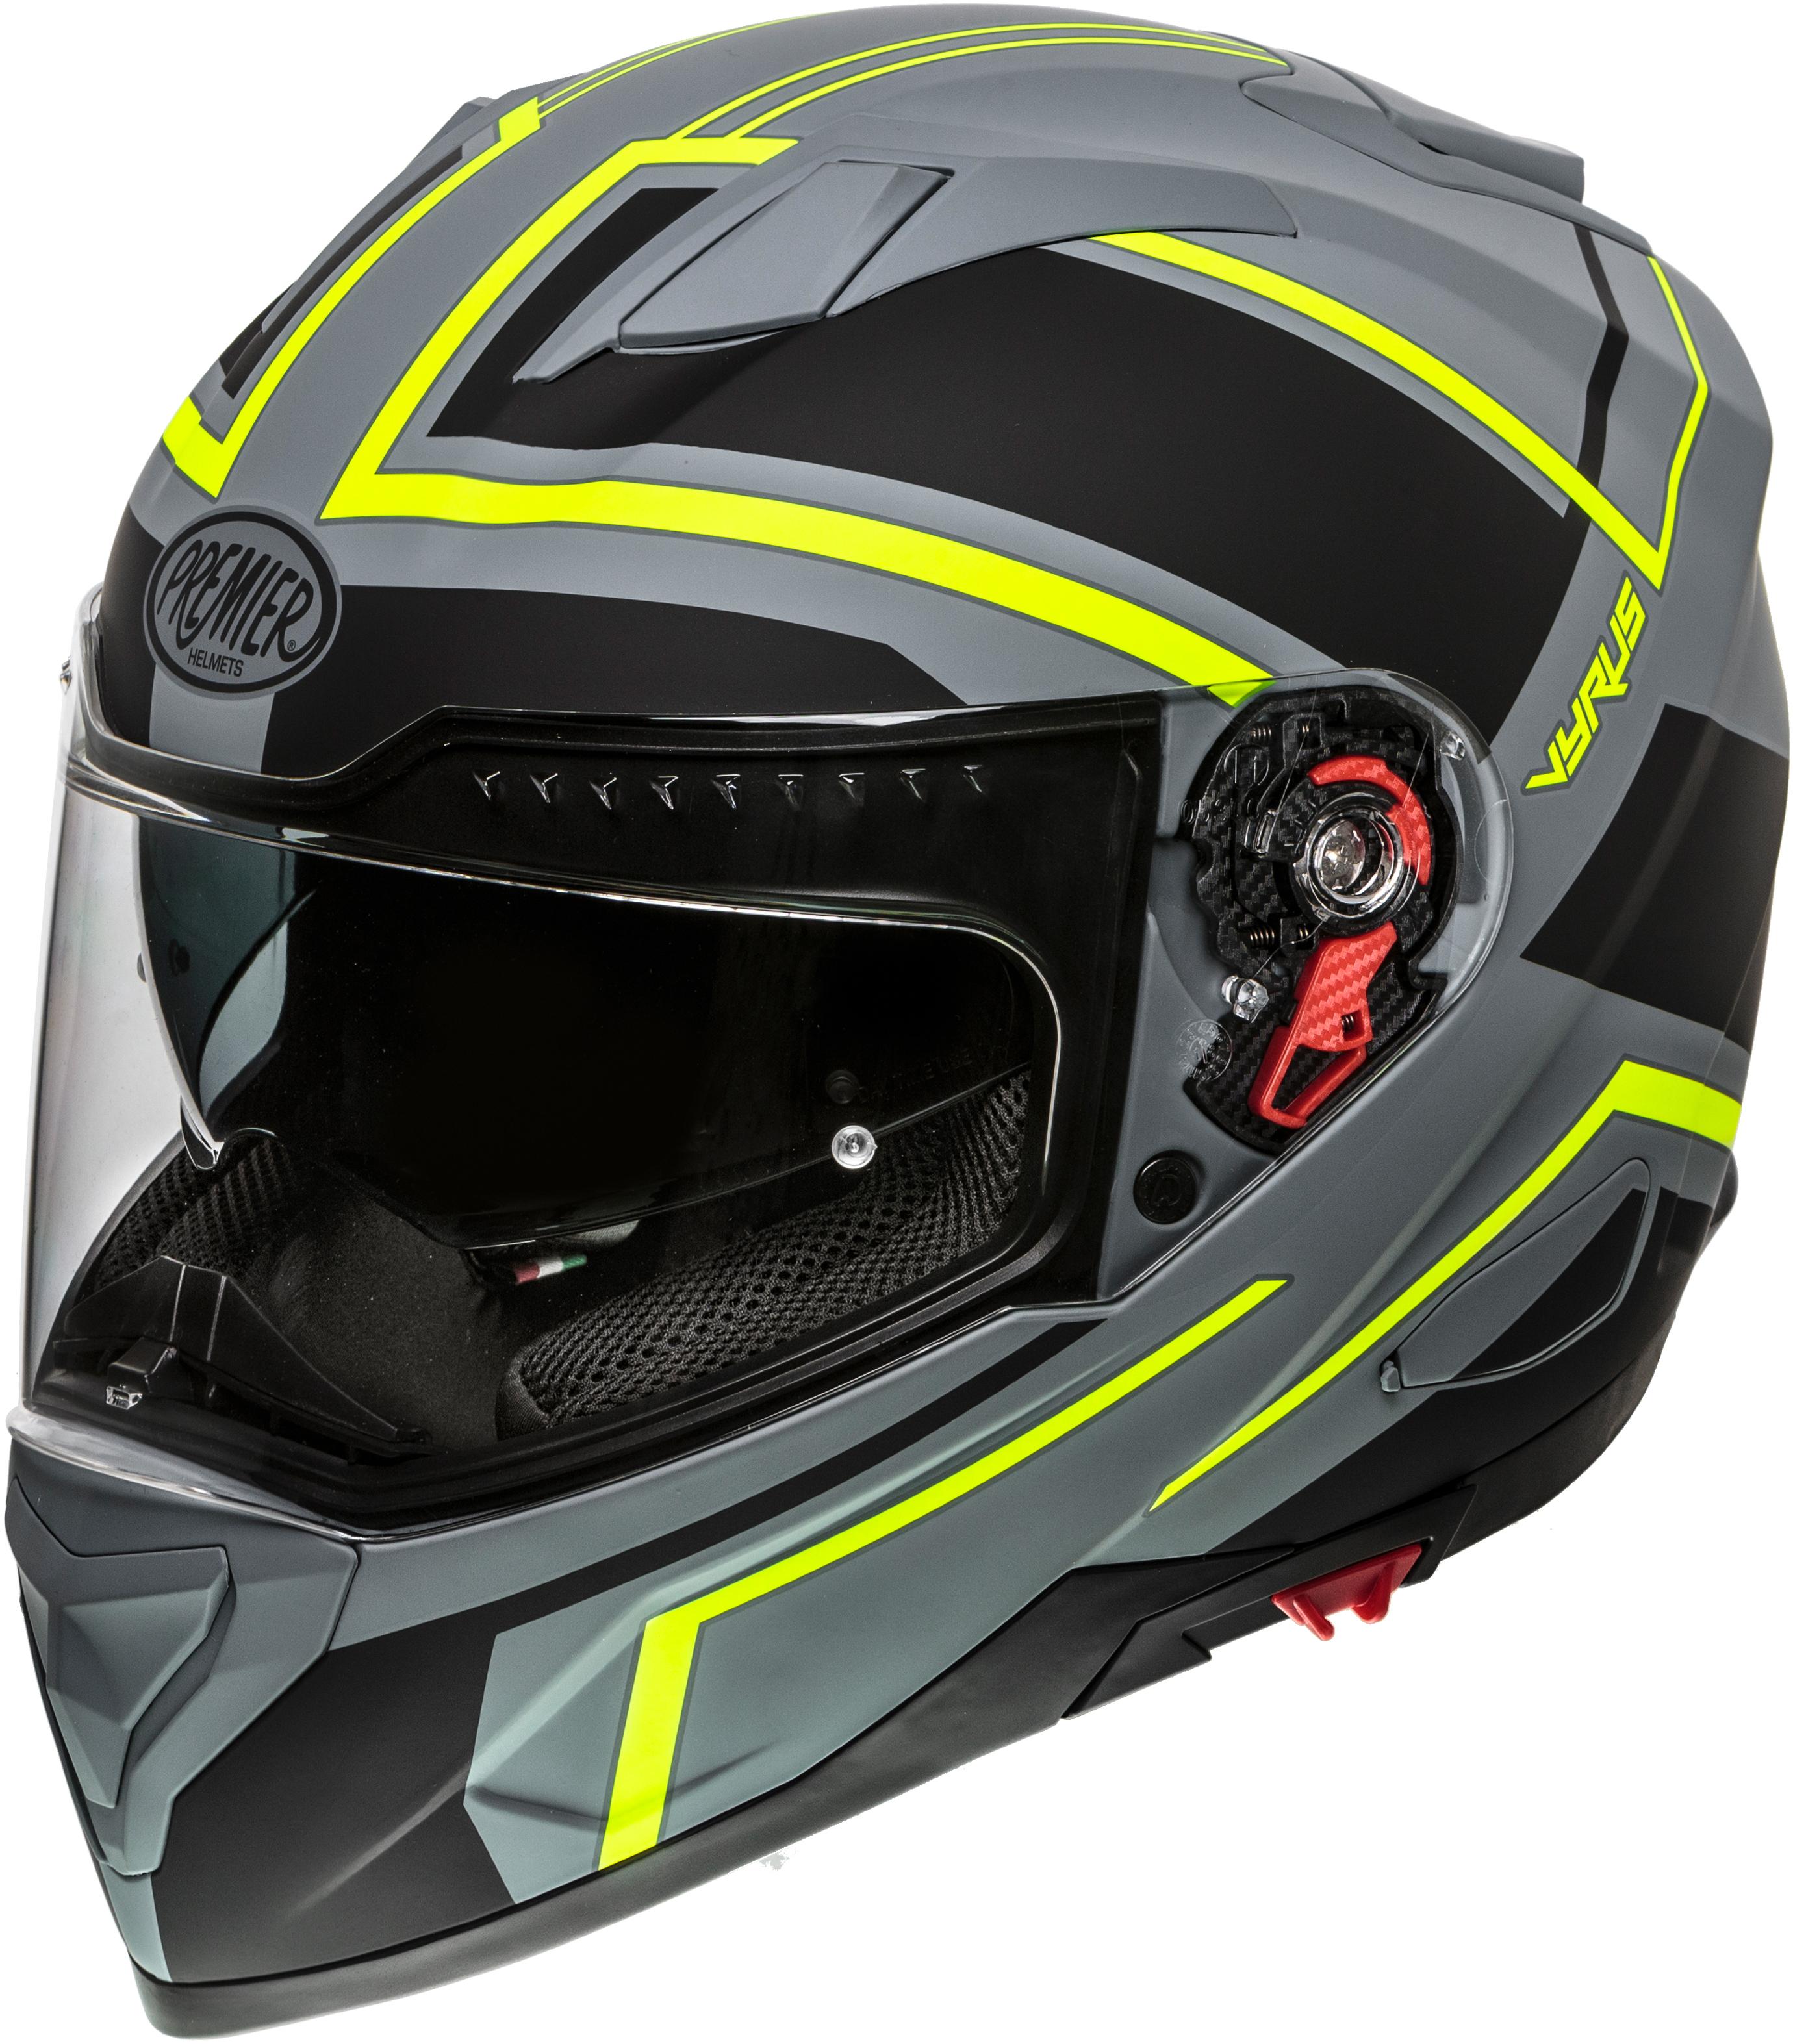 Premier Vyrus Helmet Grey/Neon Matt - Large